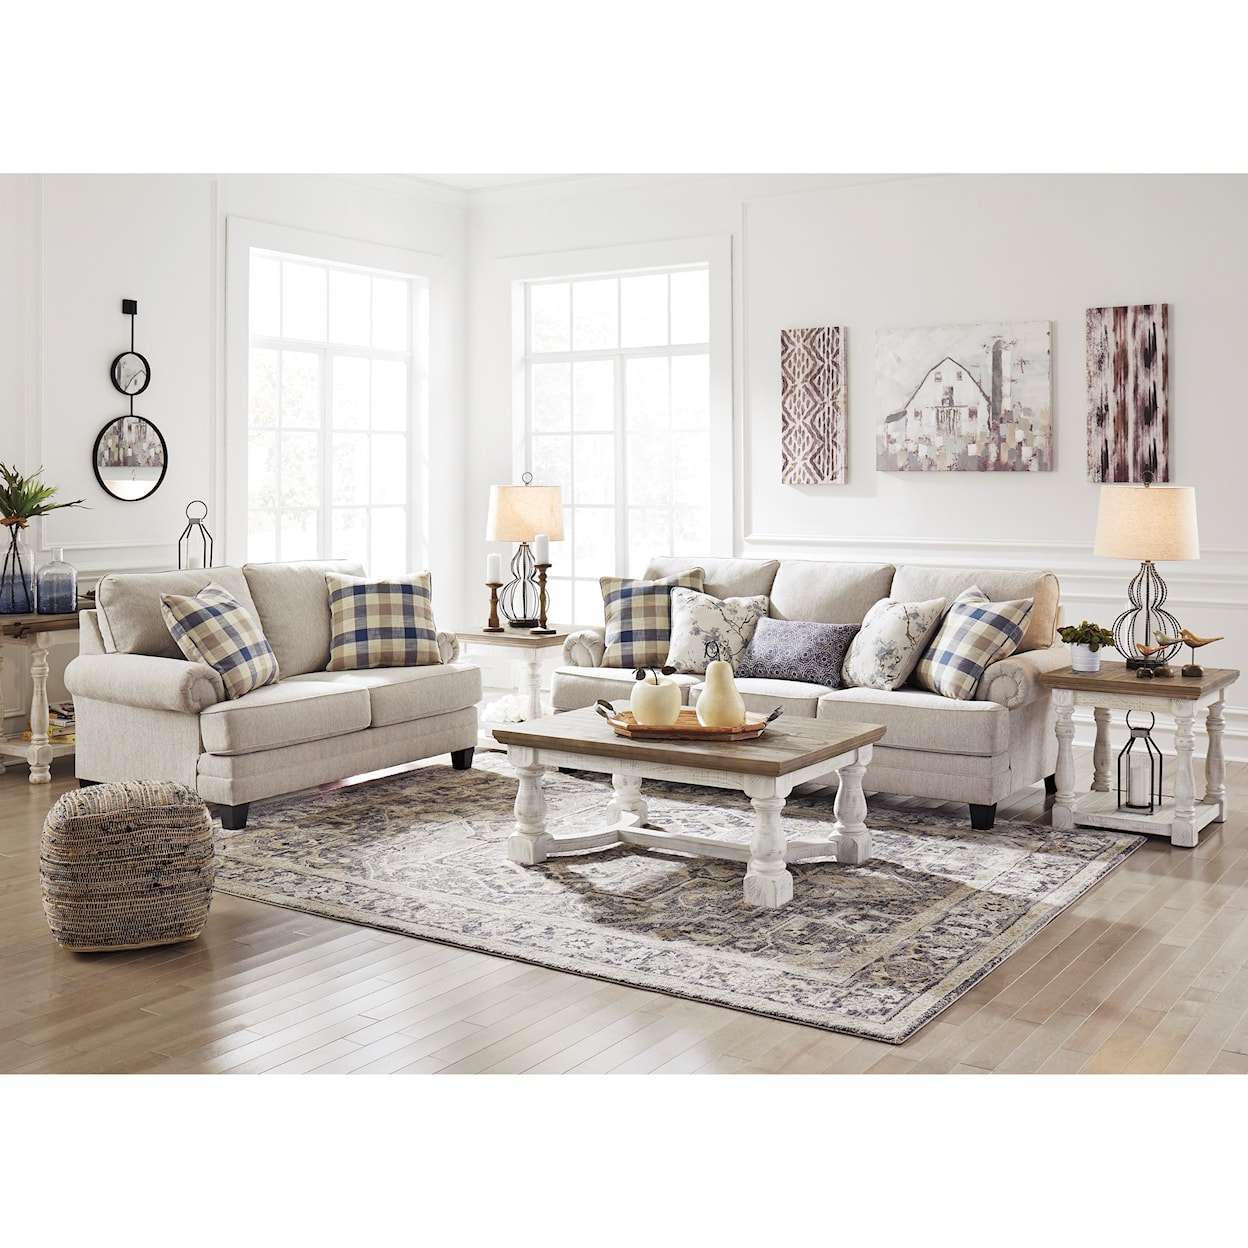 Ashley Furniture Benchcraft Meggett Sofa